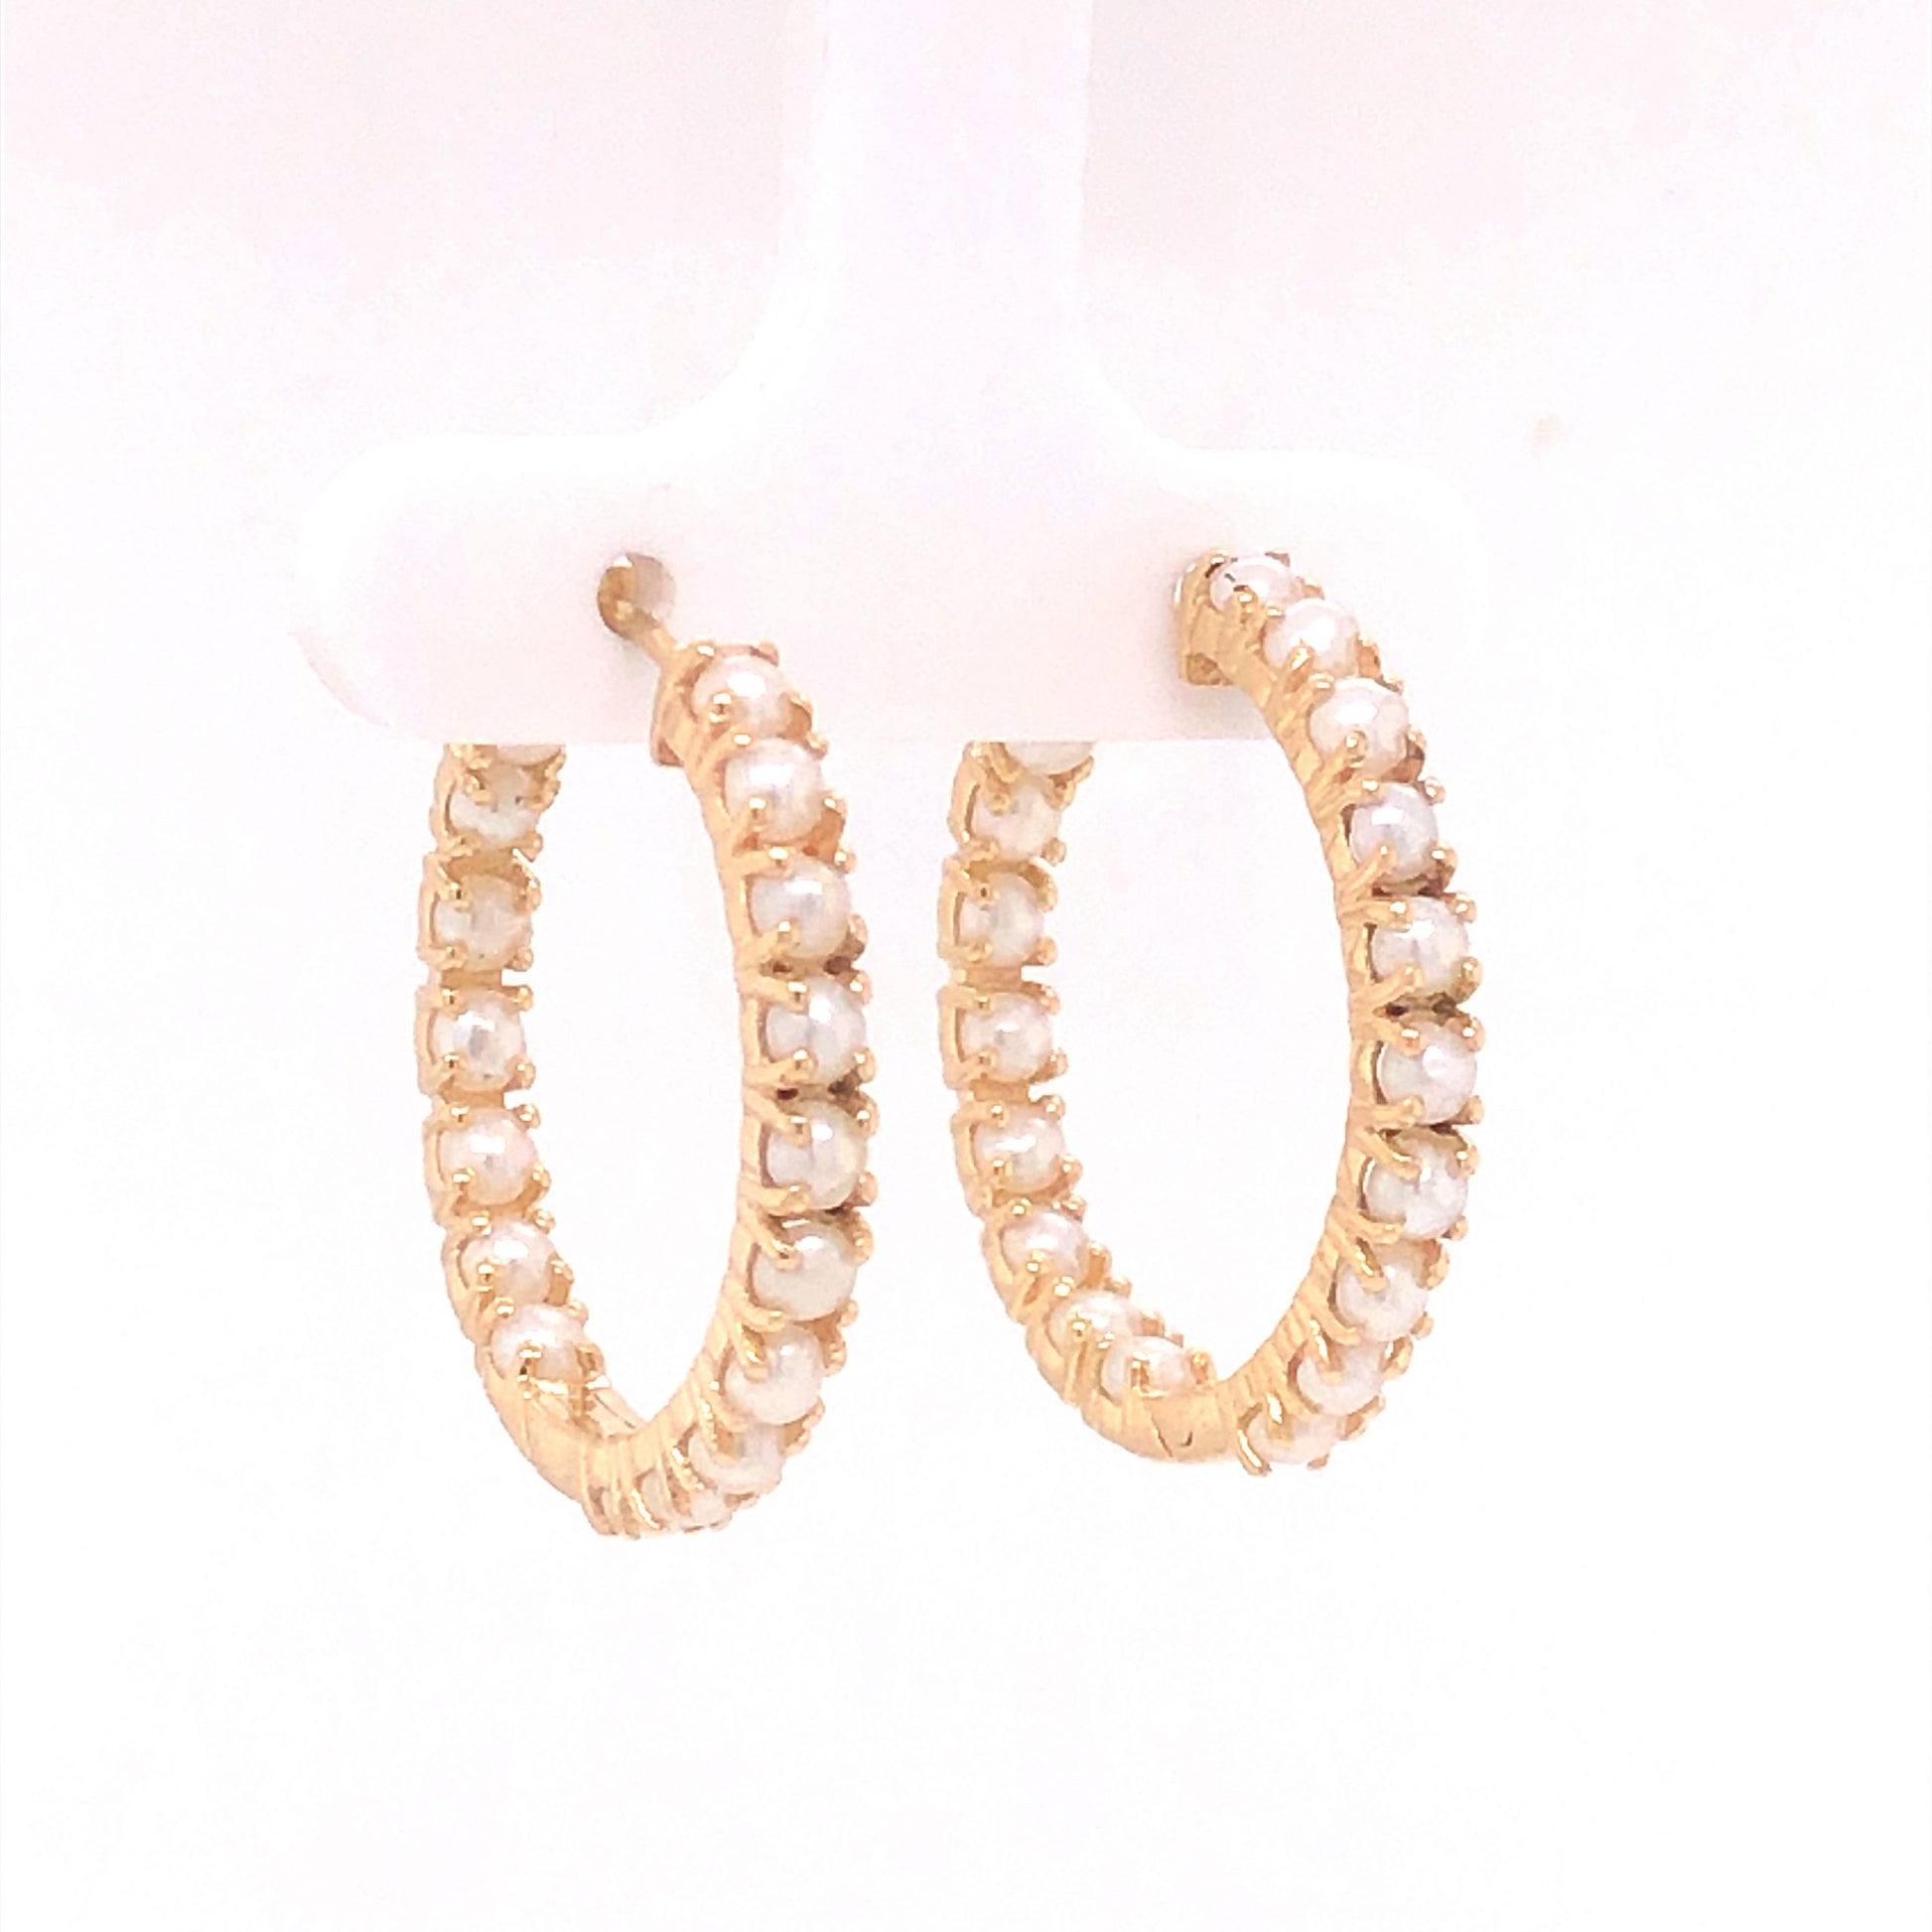 Pearl Hoop Earrings in 14k Yellow GoldComposition: 14 Karat Yellow GoldTotal Gram Weight: 5.8 gInscription: 14k